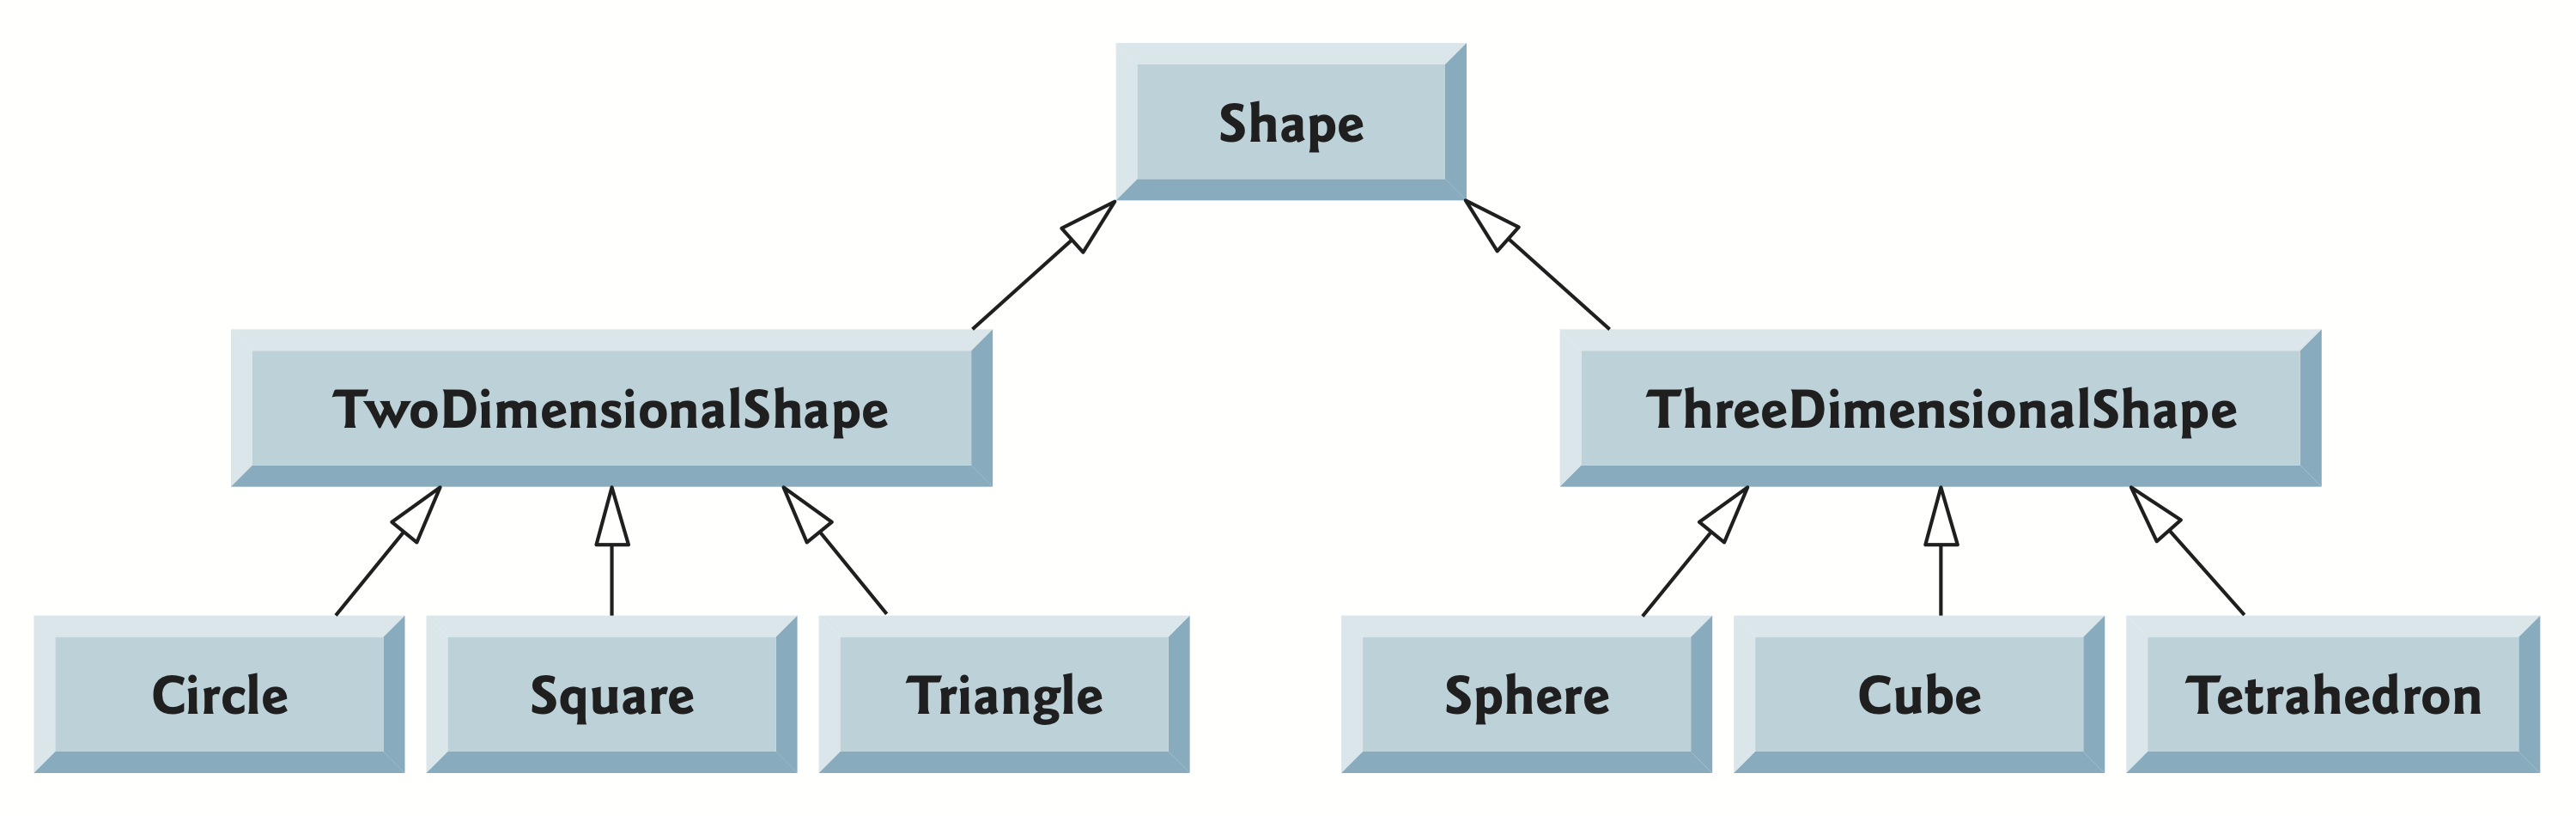 Shape inheritance hierarchy